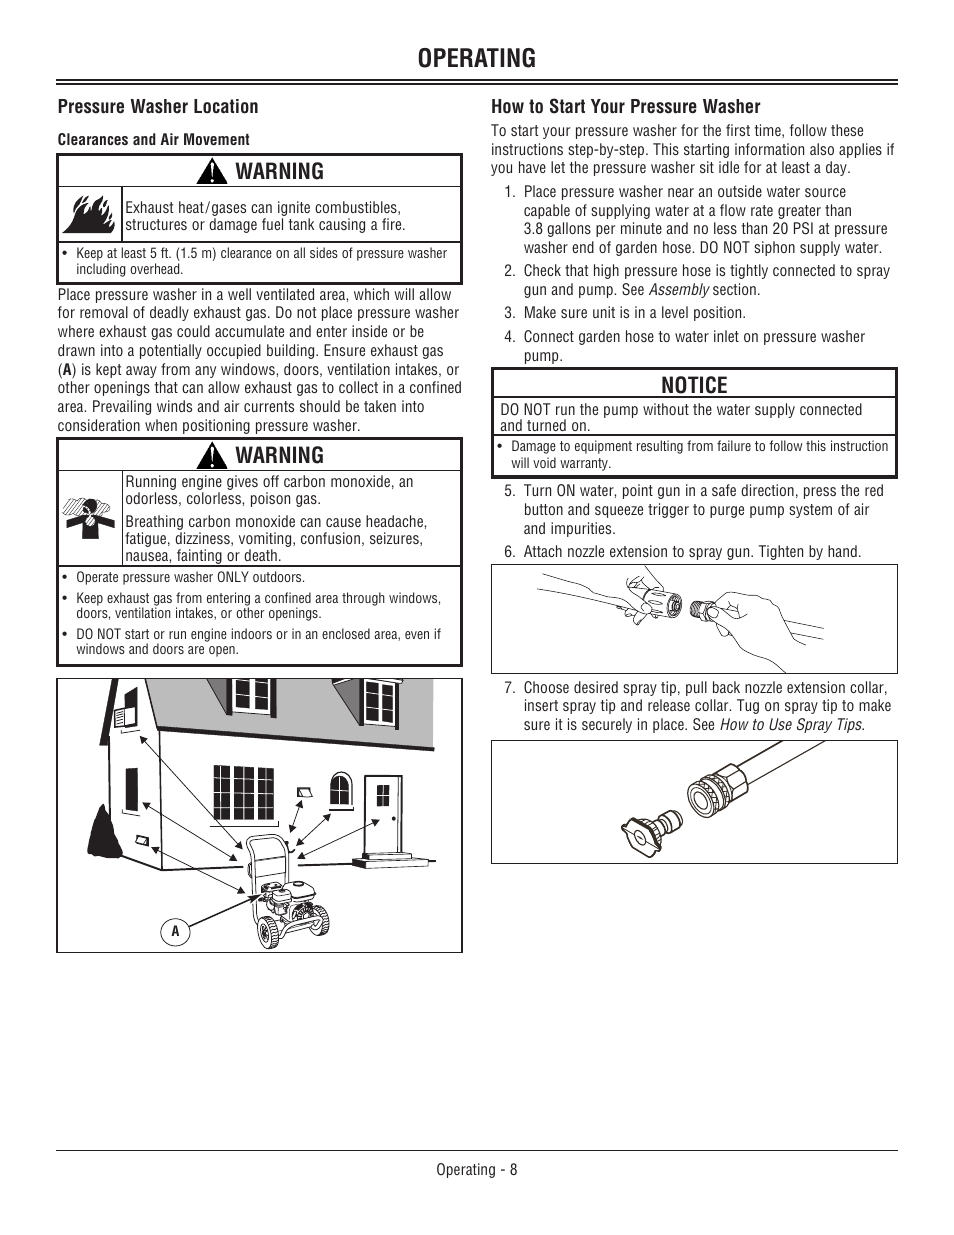 Operating, Warning, Notice | John Deere OMM156510 User Manual | Page 12 / 24